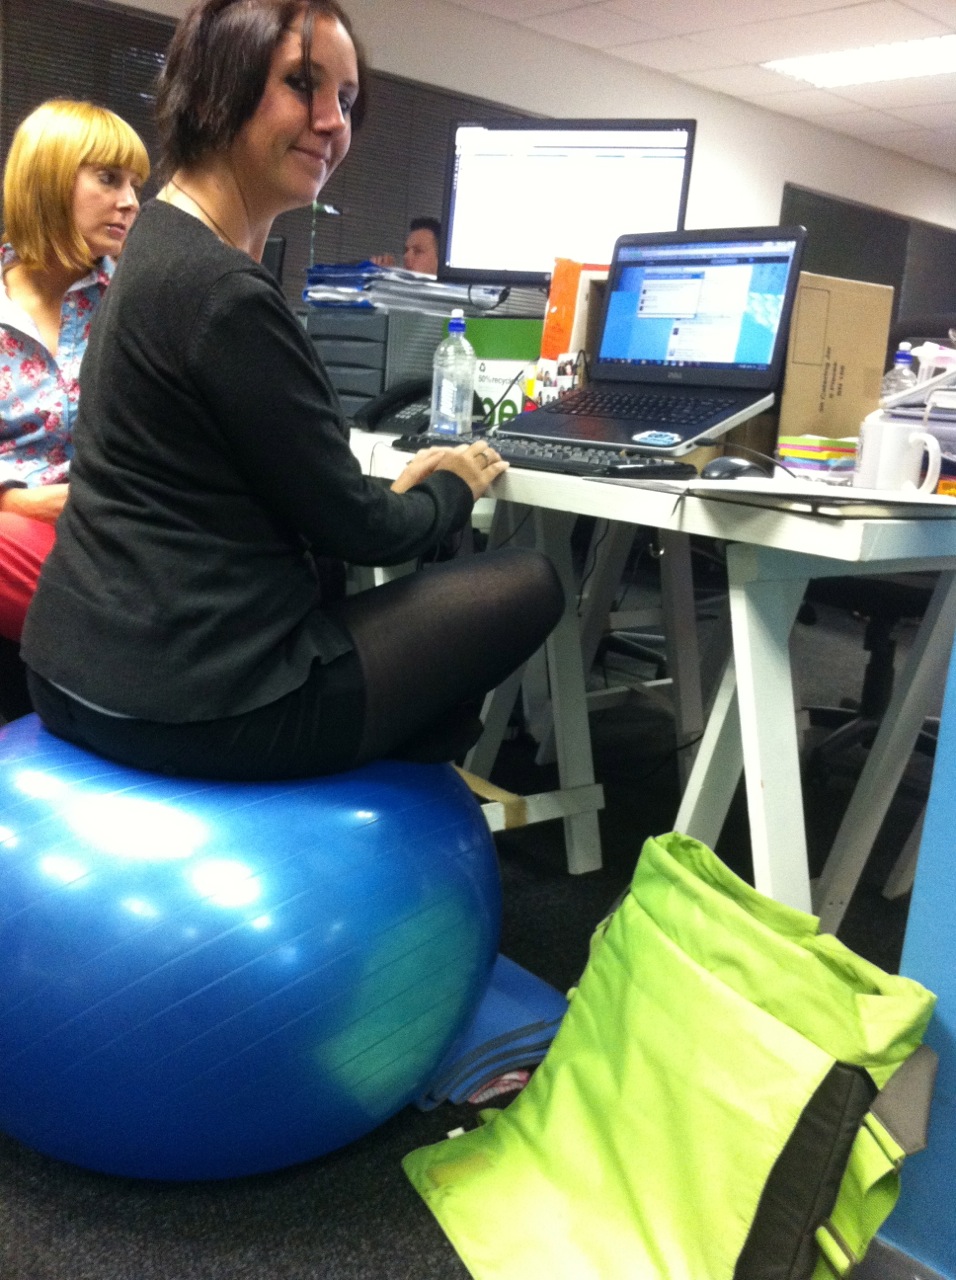 sitting on medicine ball at desk